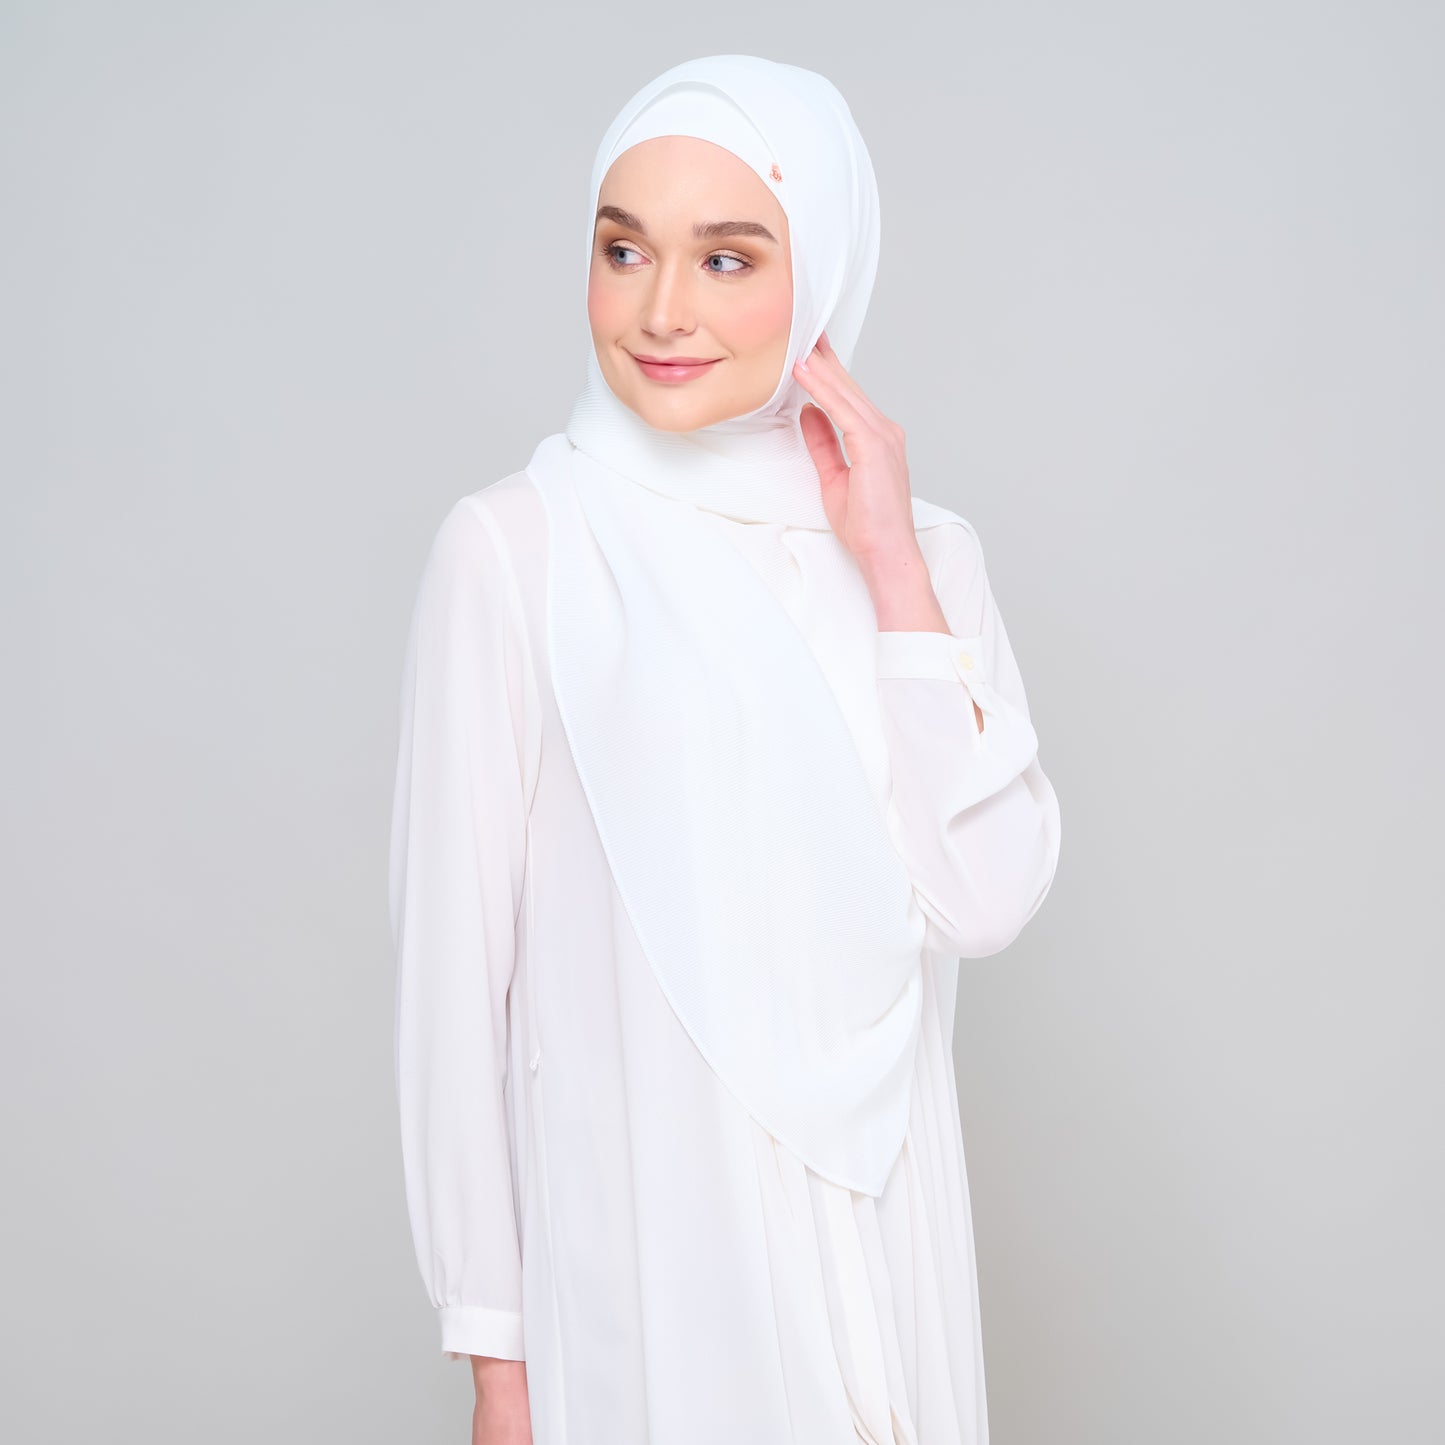 Zara Micropleats in Pure White